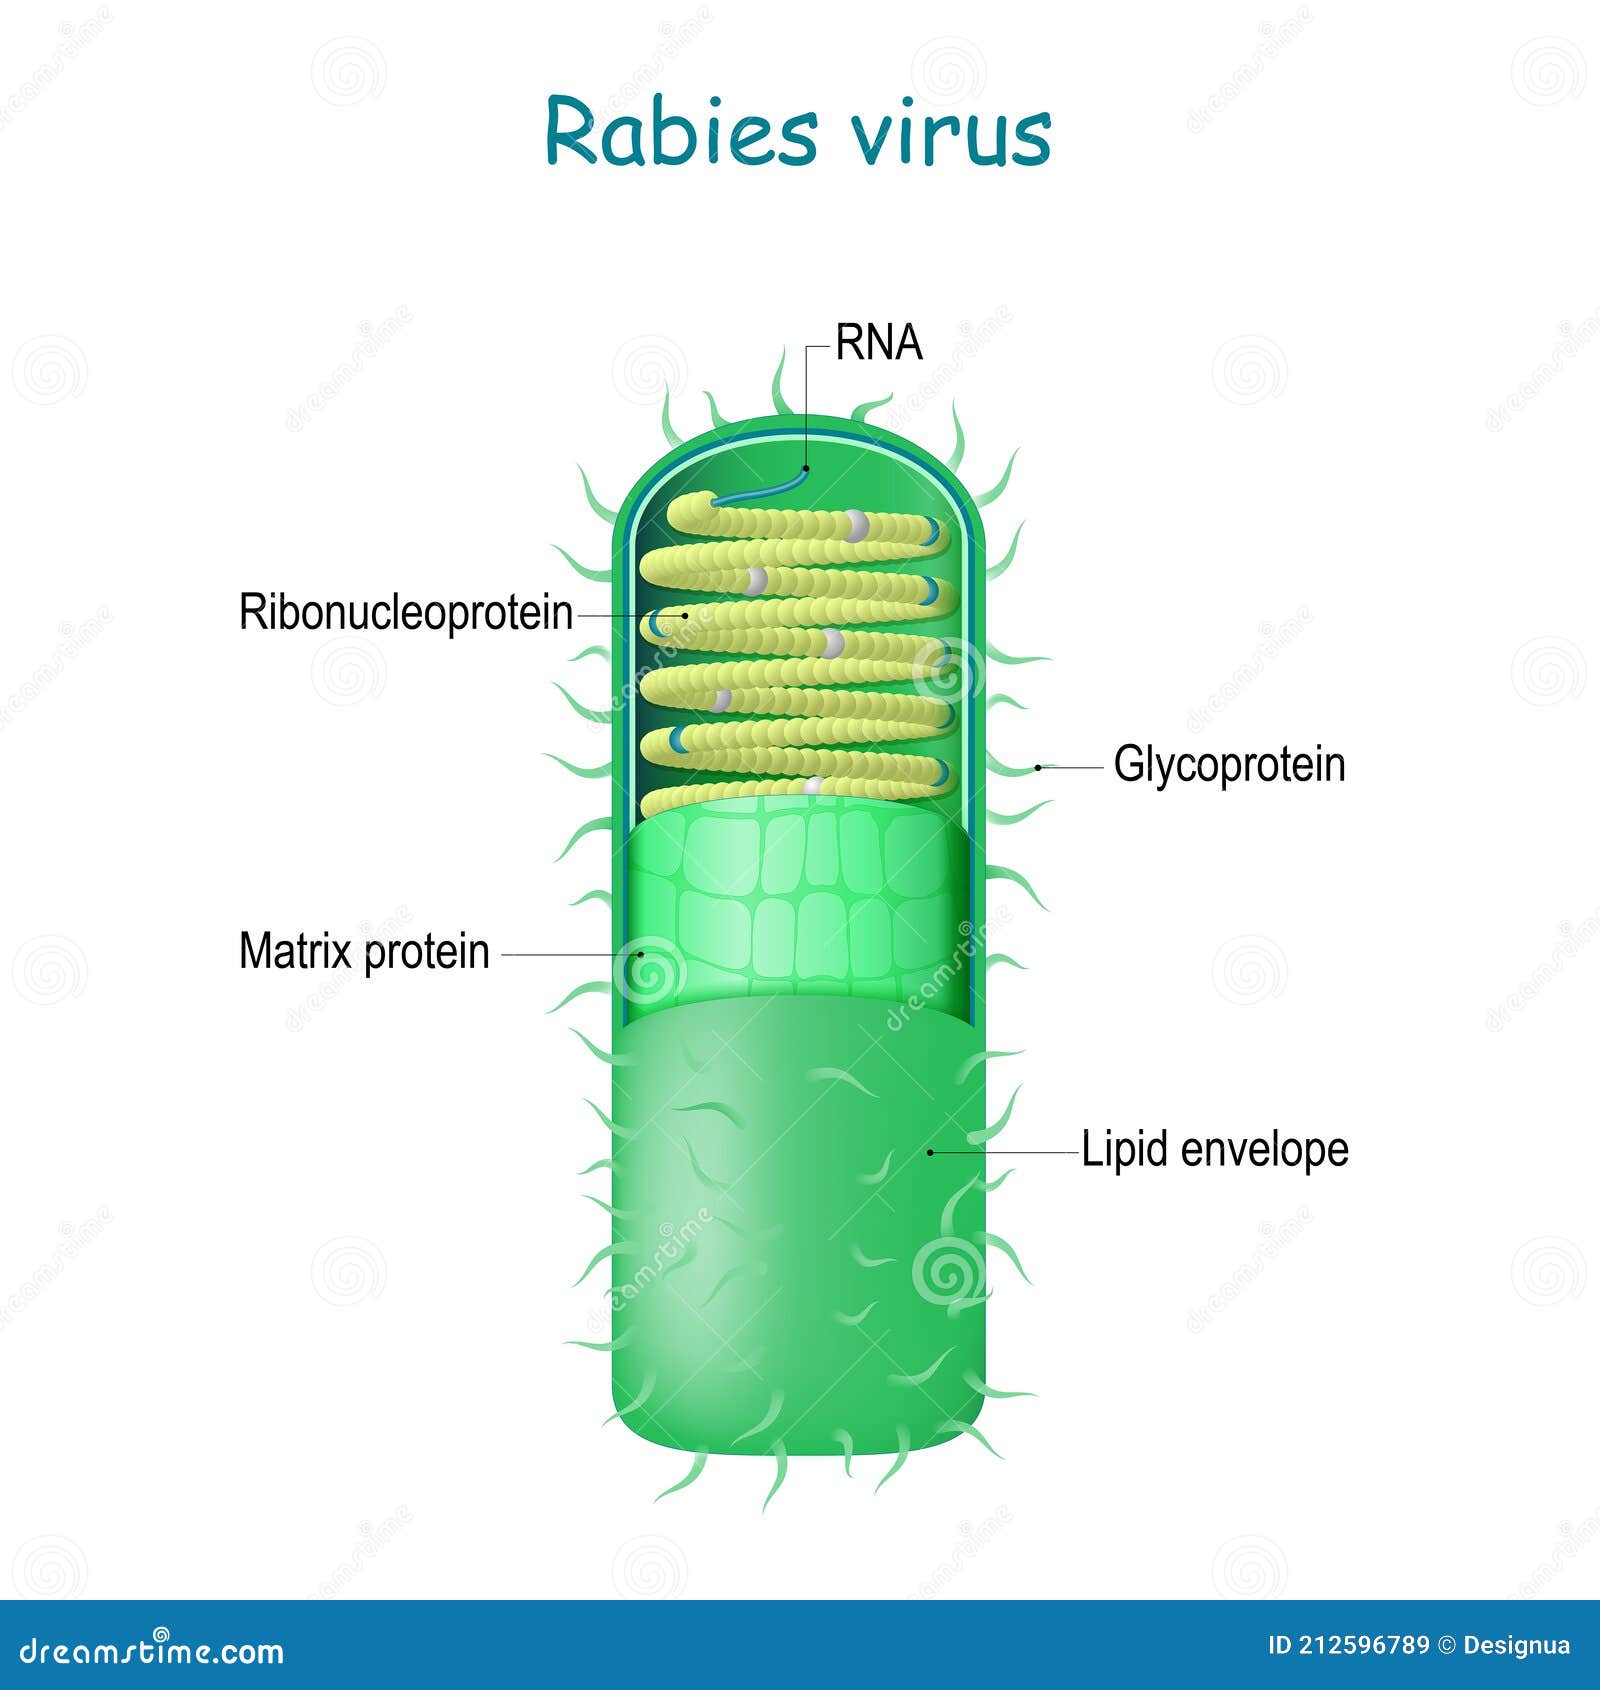 rabies virus. virion rabies lyssavirus